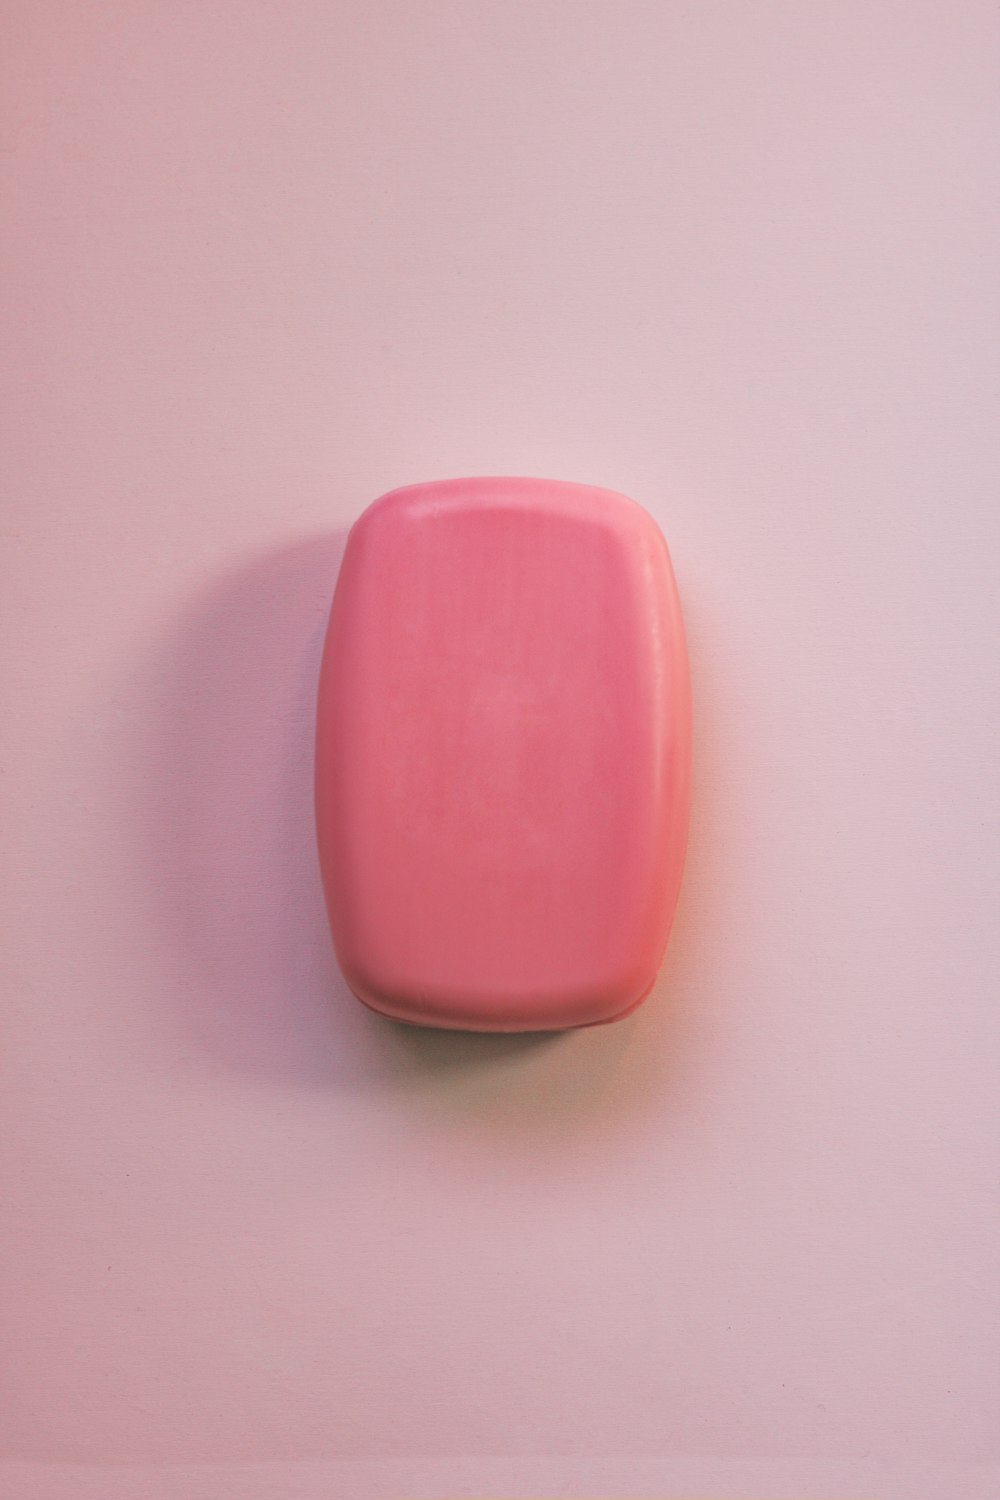 Custodia in plastica rosa su superficie bianca